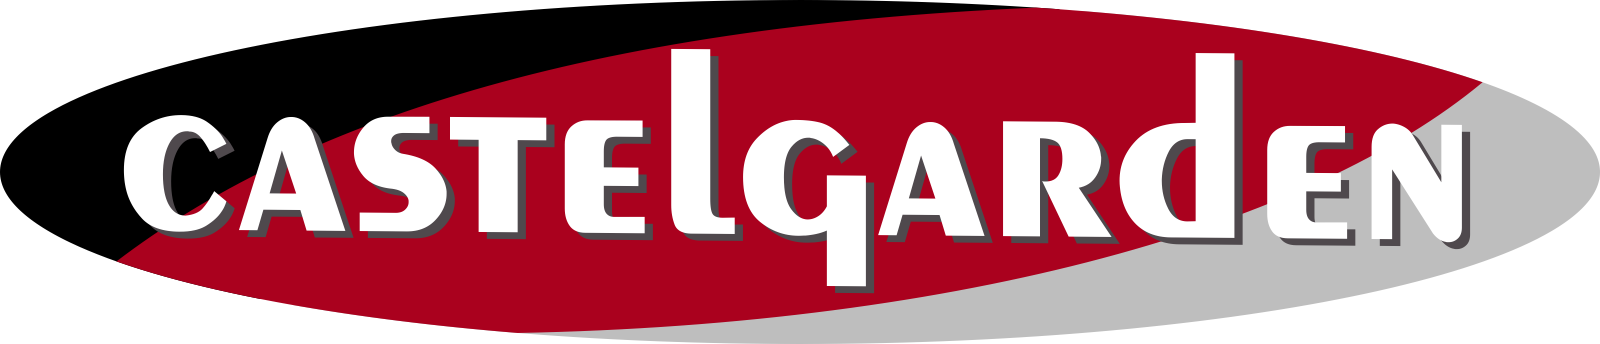 Castelgarden-logo - Groentechniek Hoogerheide